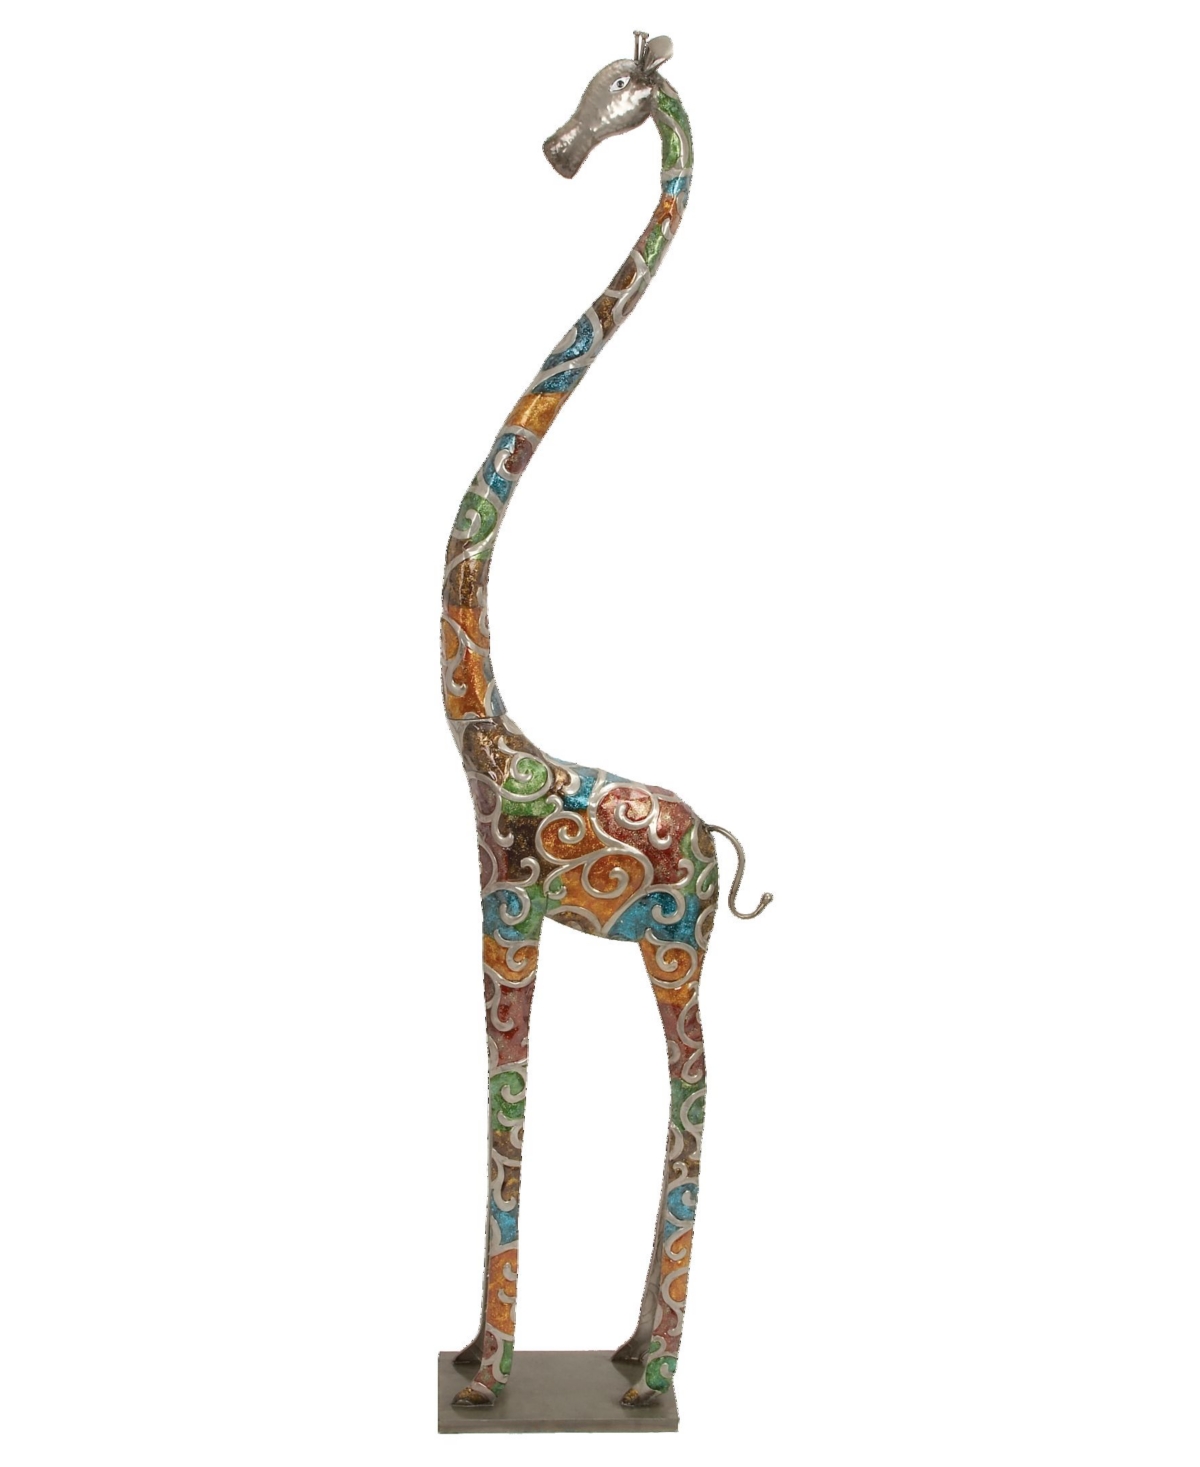 Rosemary Lane Eclectic Metal Giraffe Sculpture, 73" X 17" In Gray